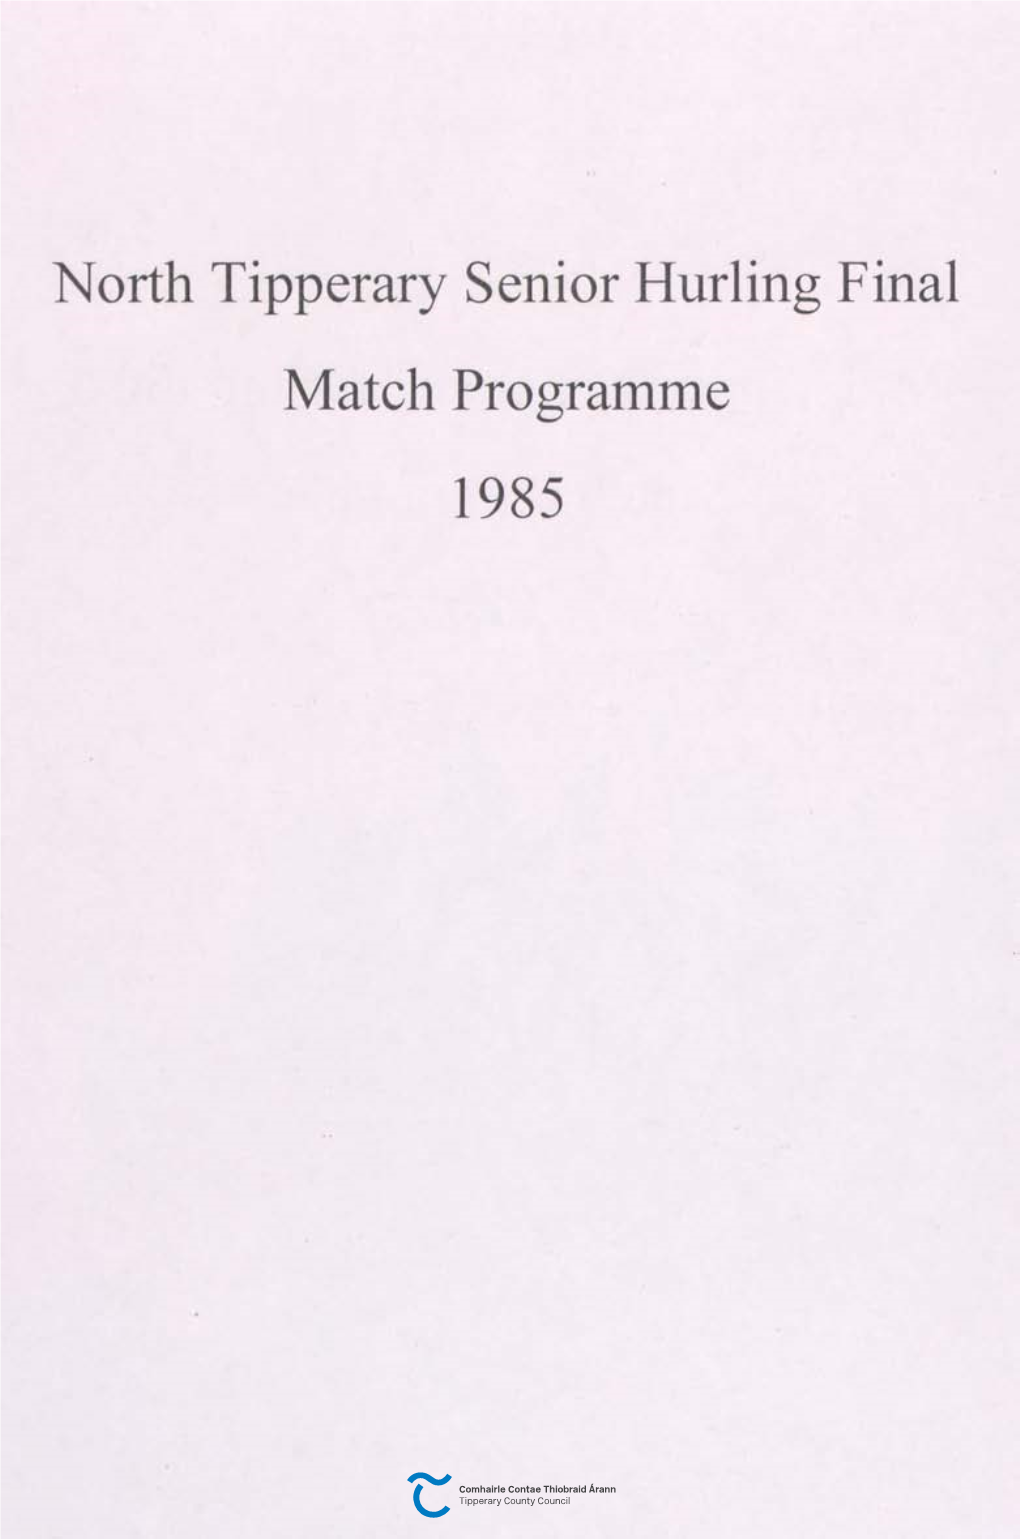 North Tipperary Senior Hurling Final Match Programme 1985